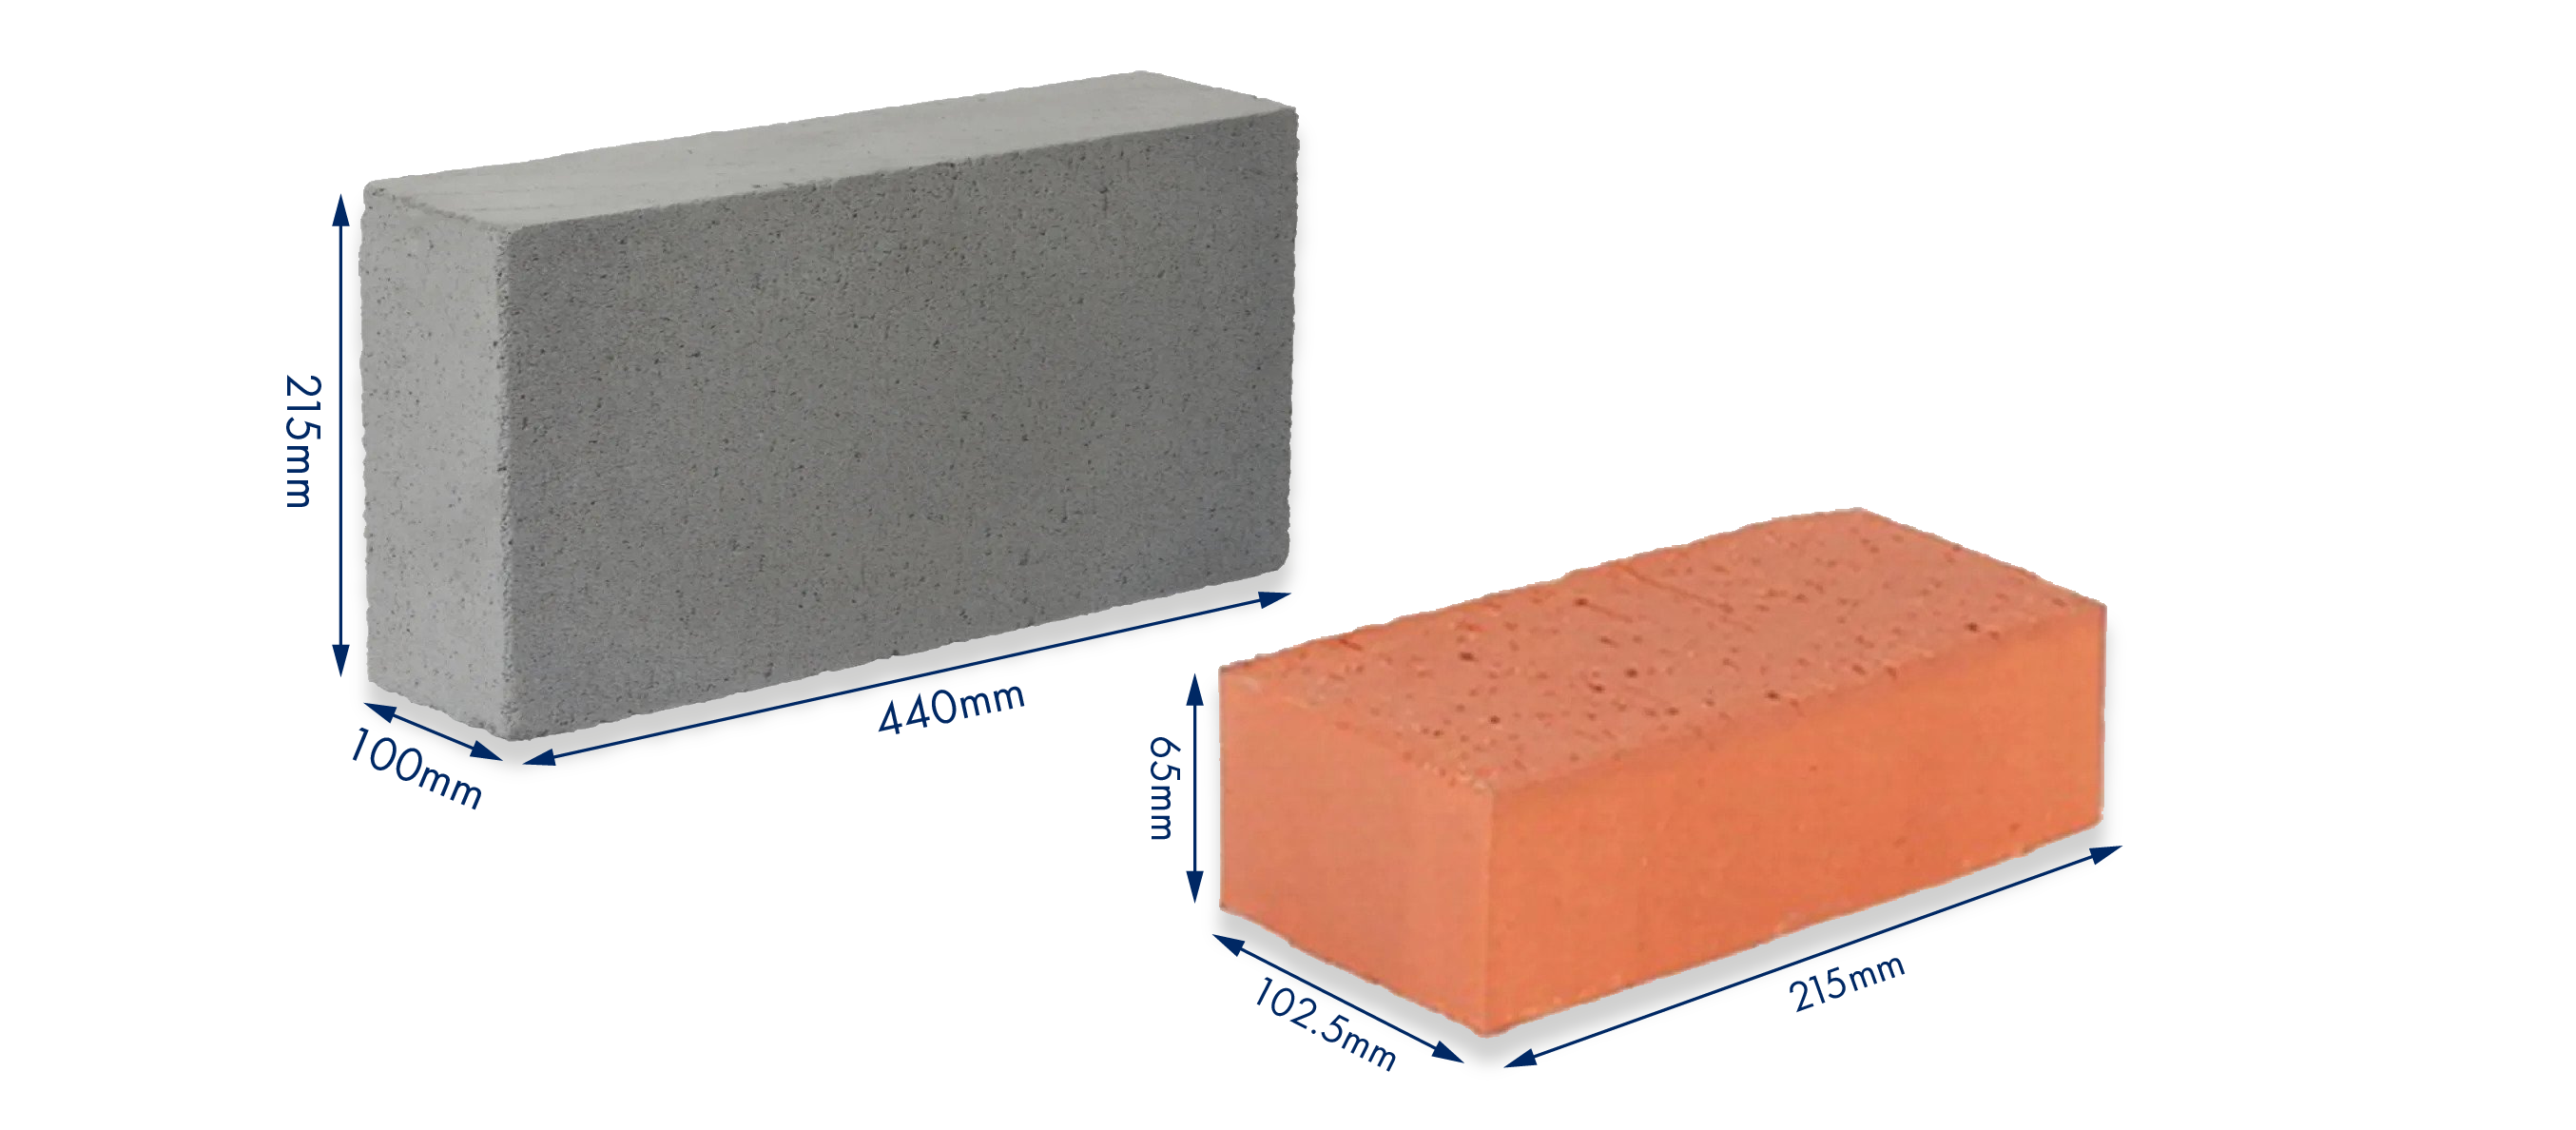 Brick sizes